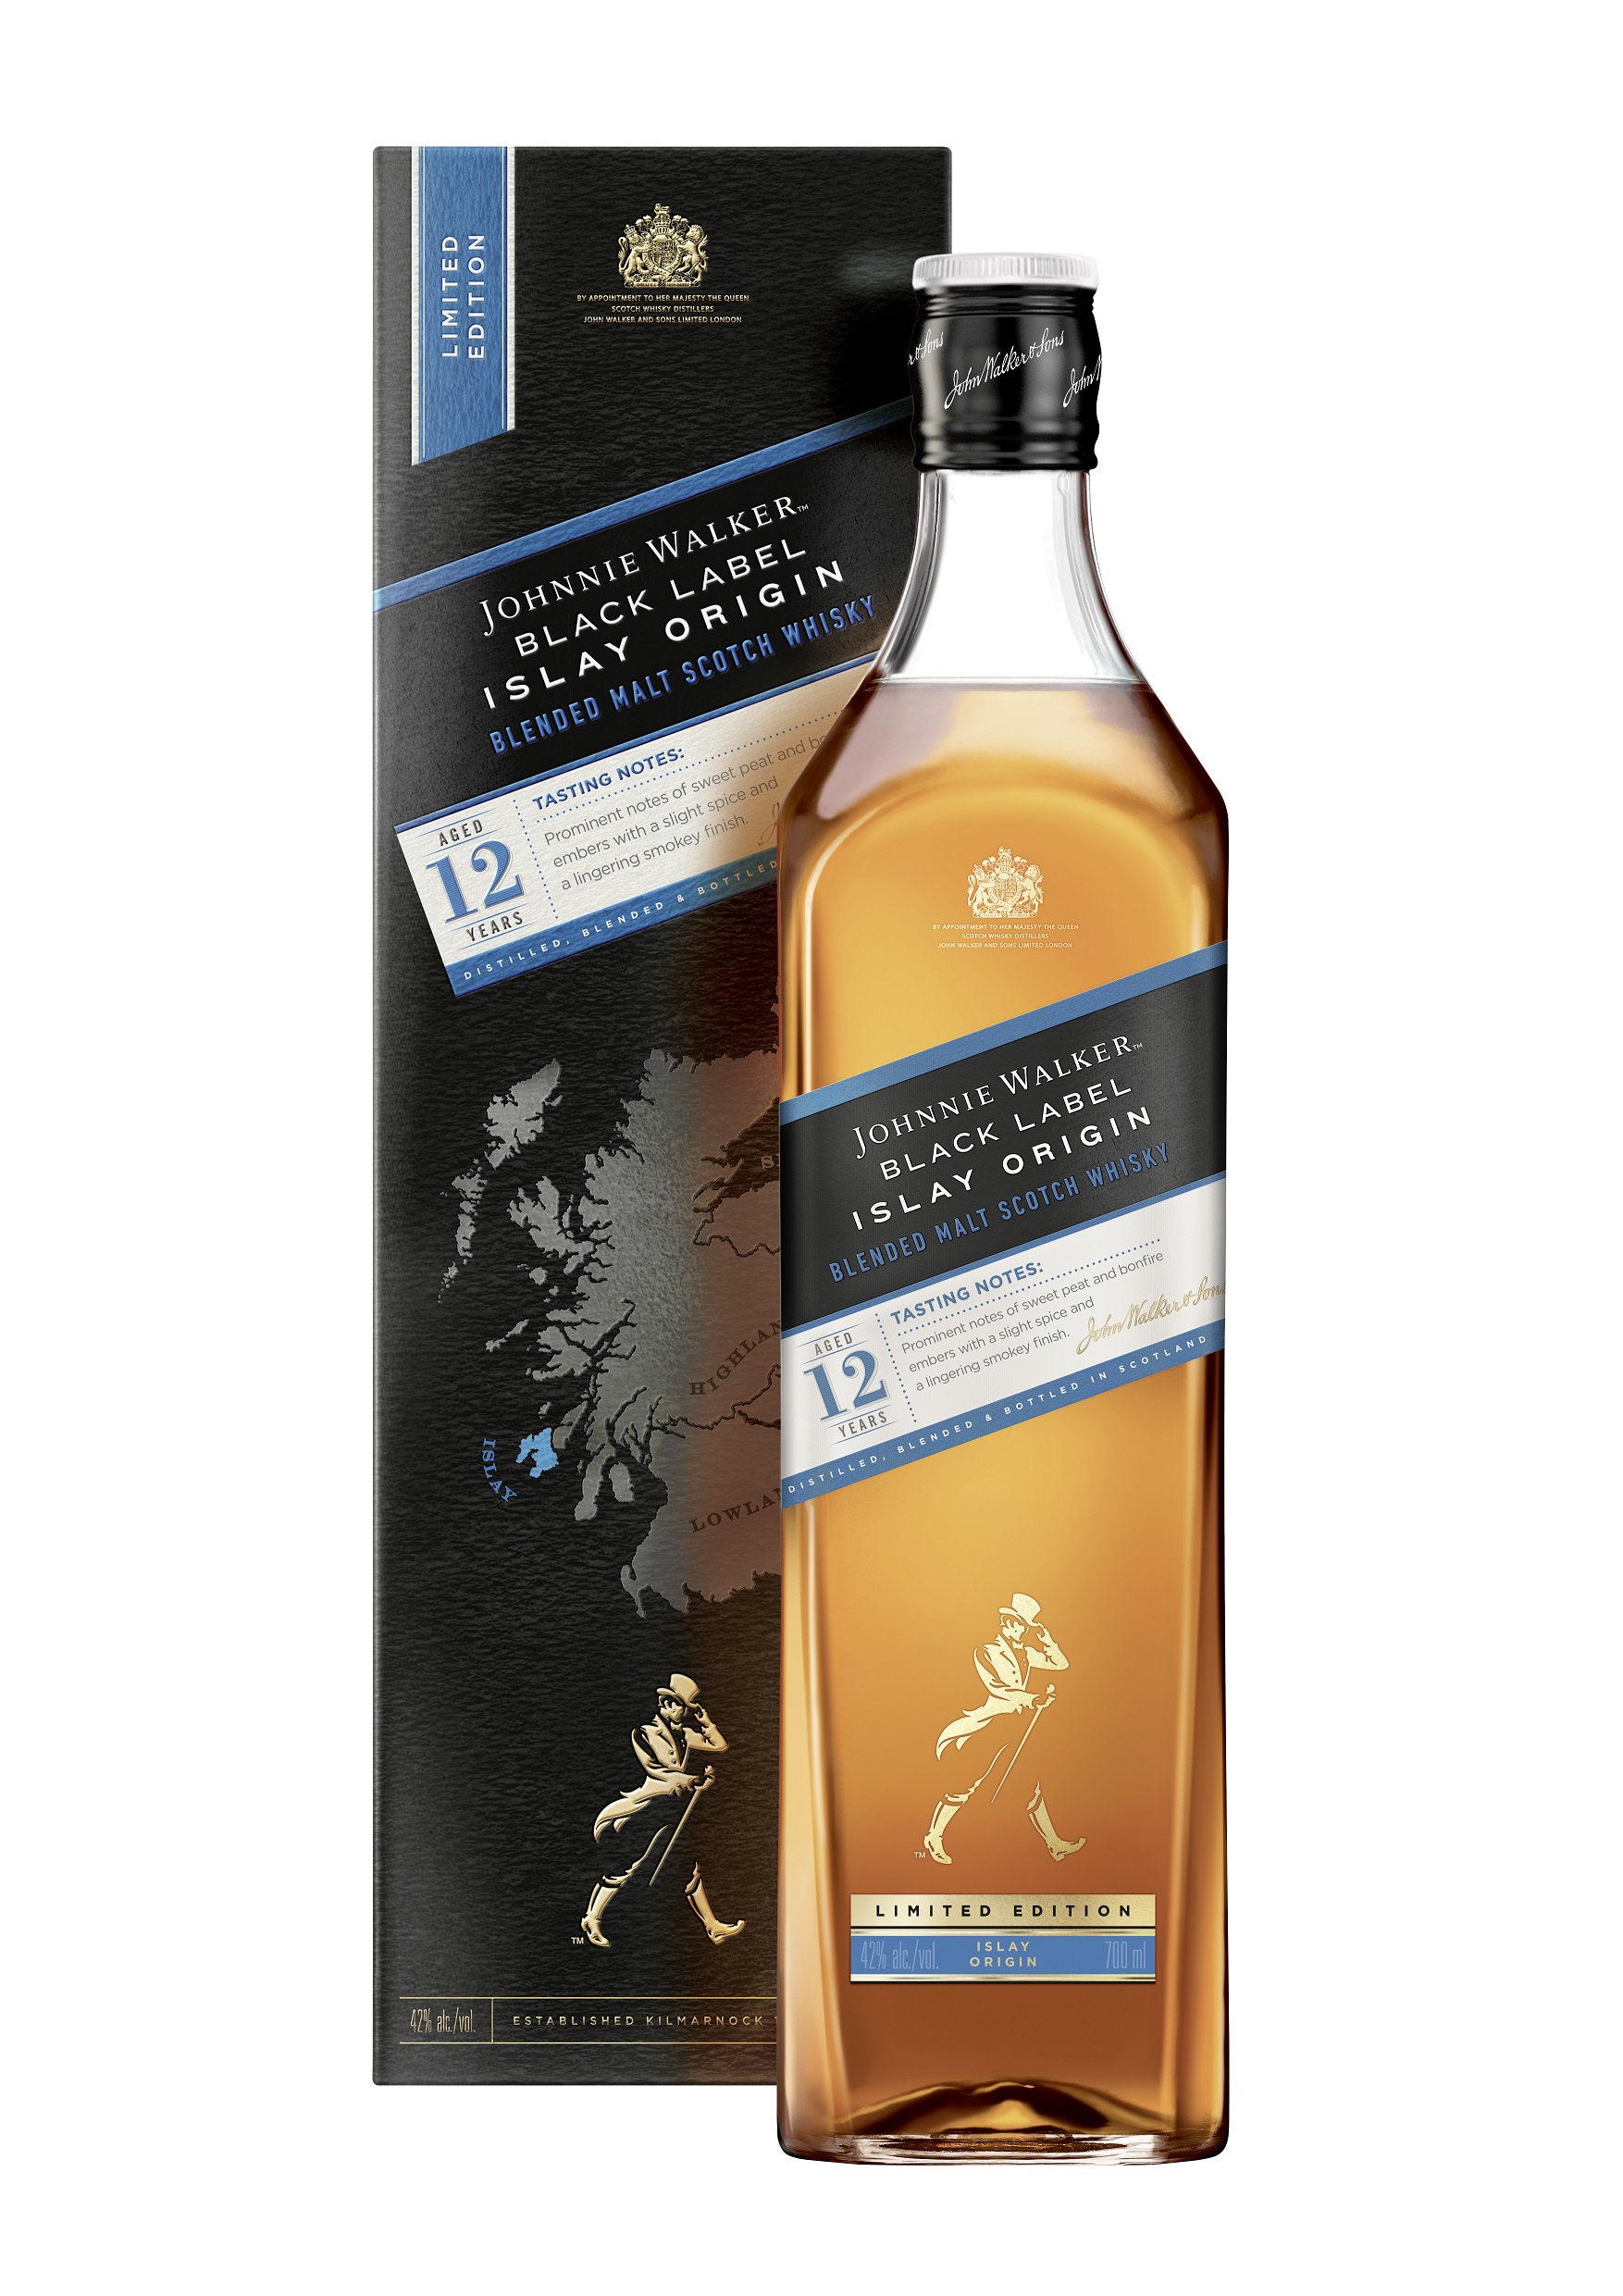 Johnnie Walker Islay Origin Whisky